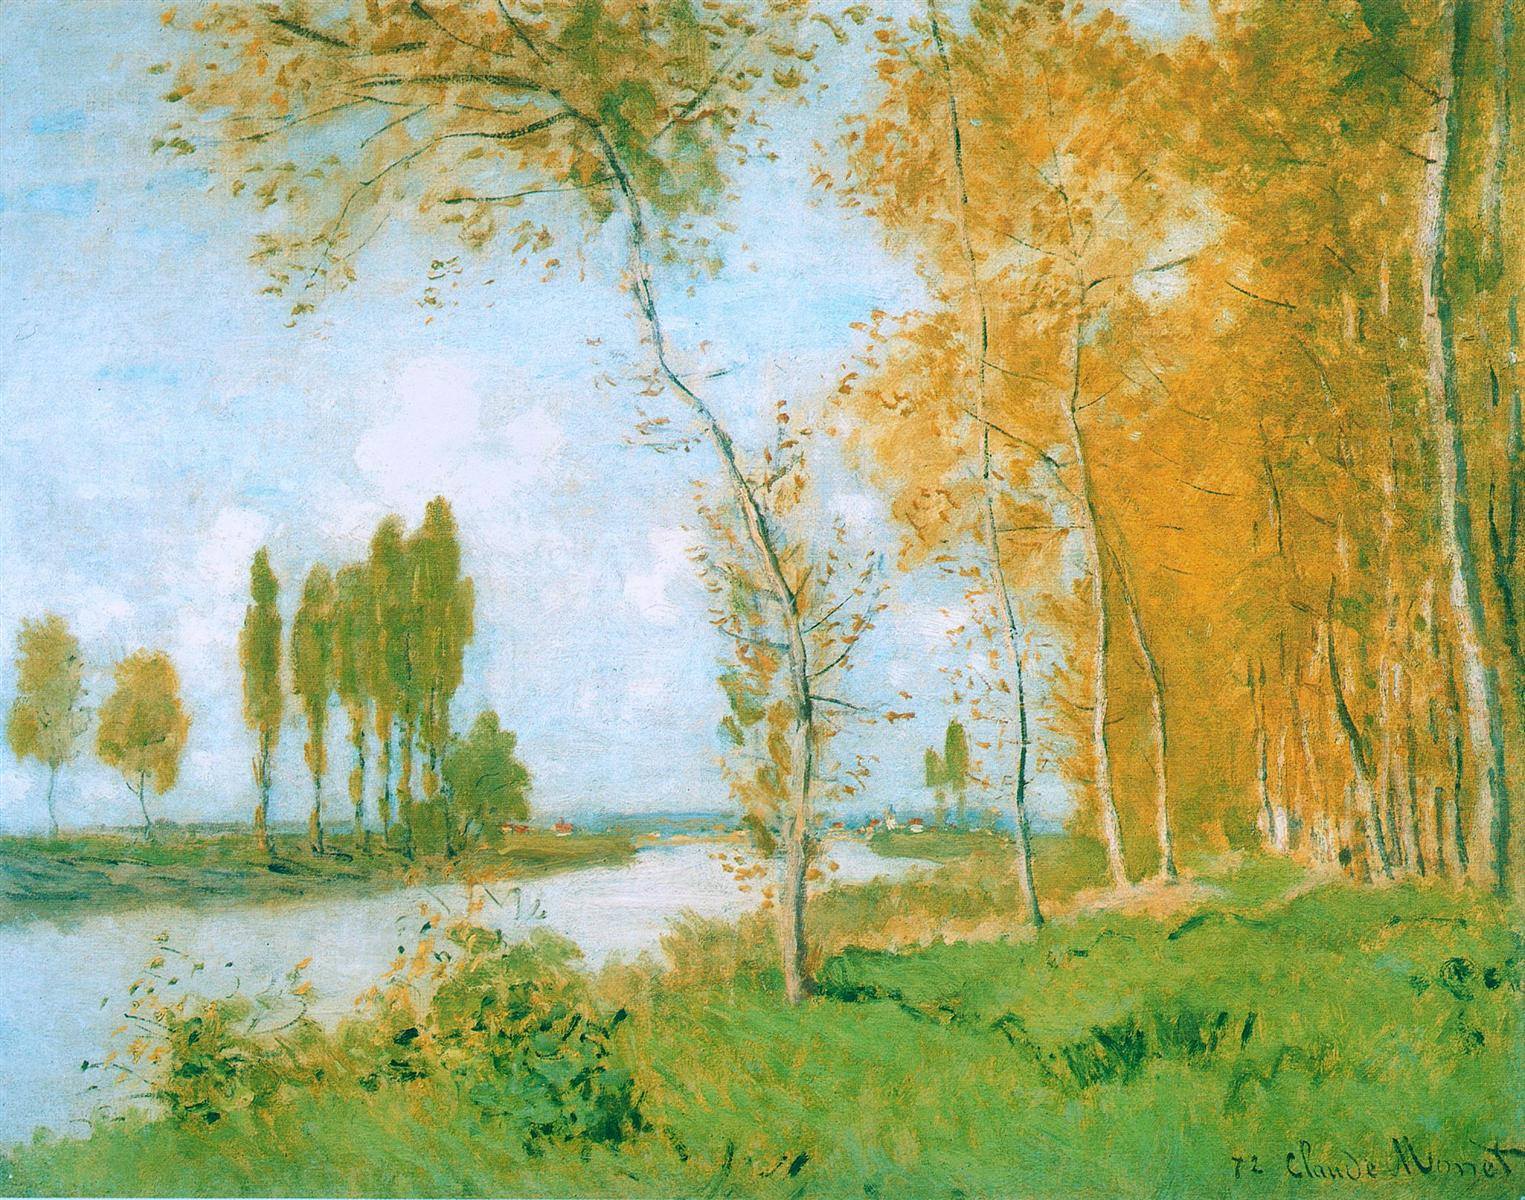 Claude+Monet-1840-1926 (824).jpg